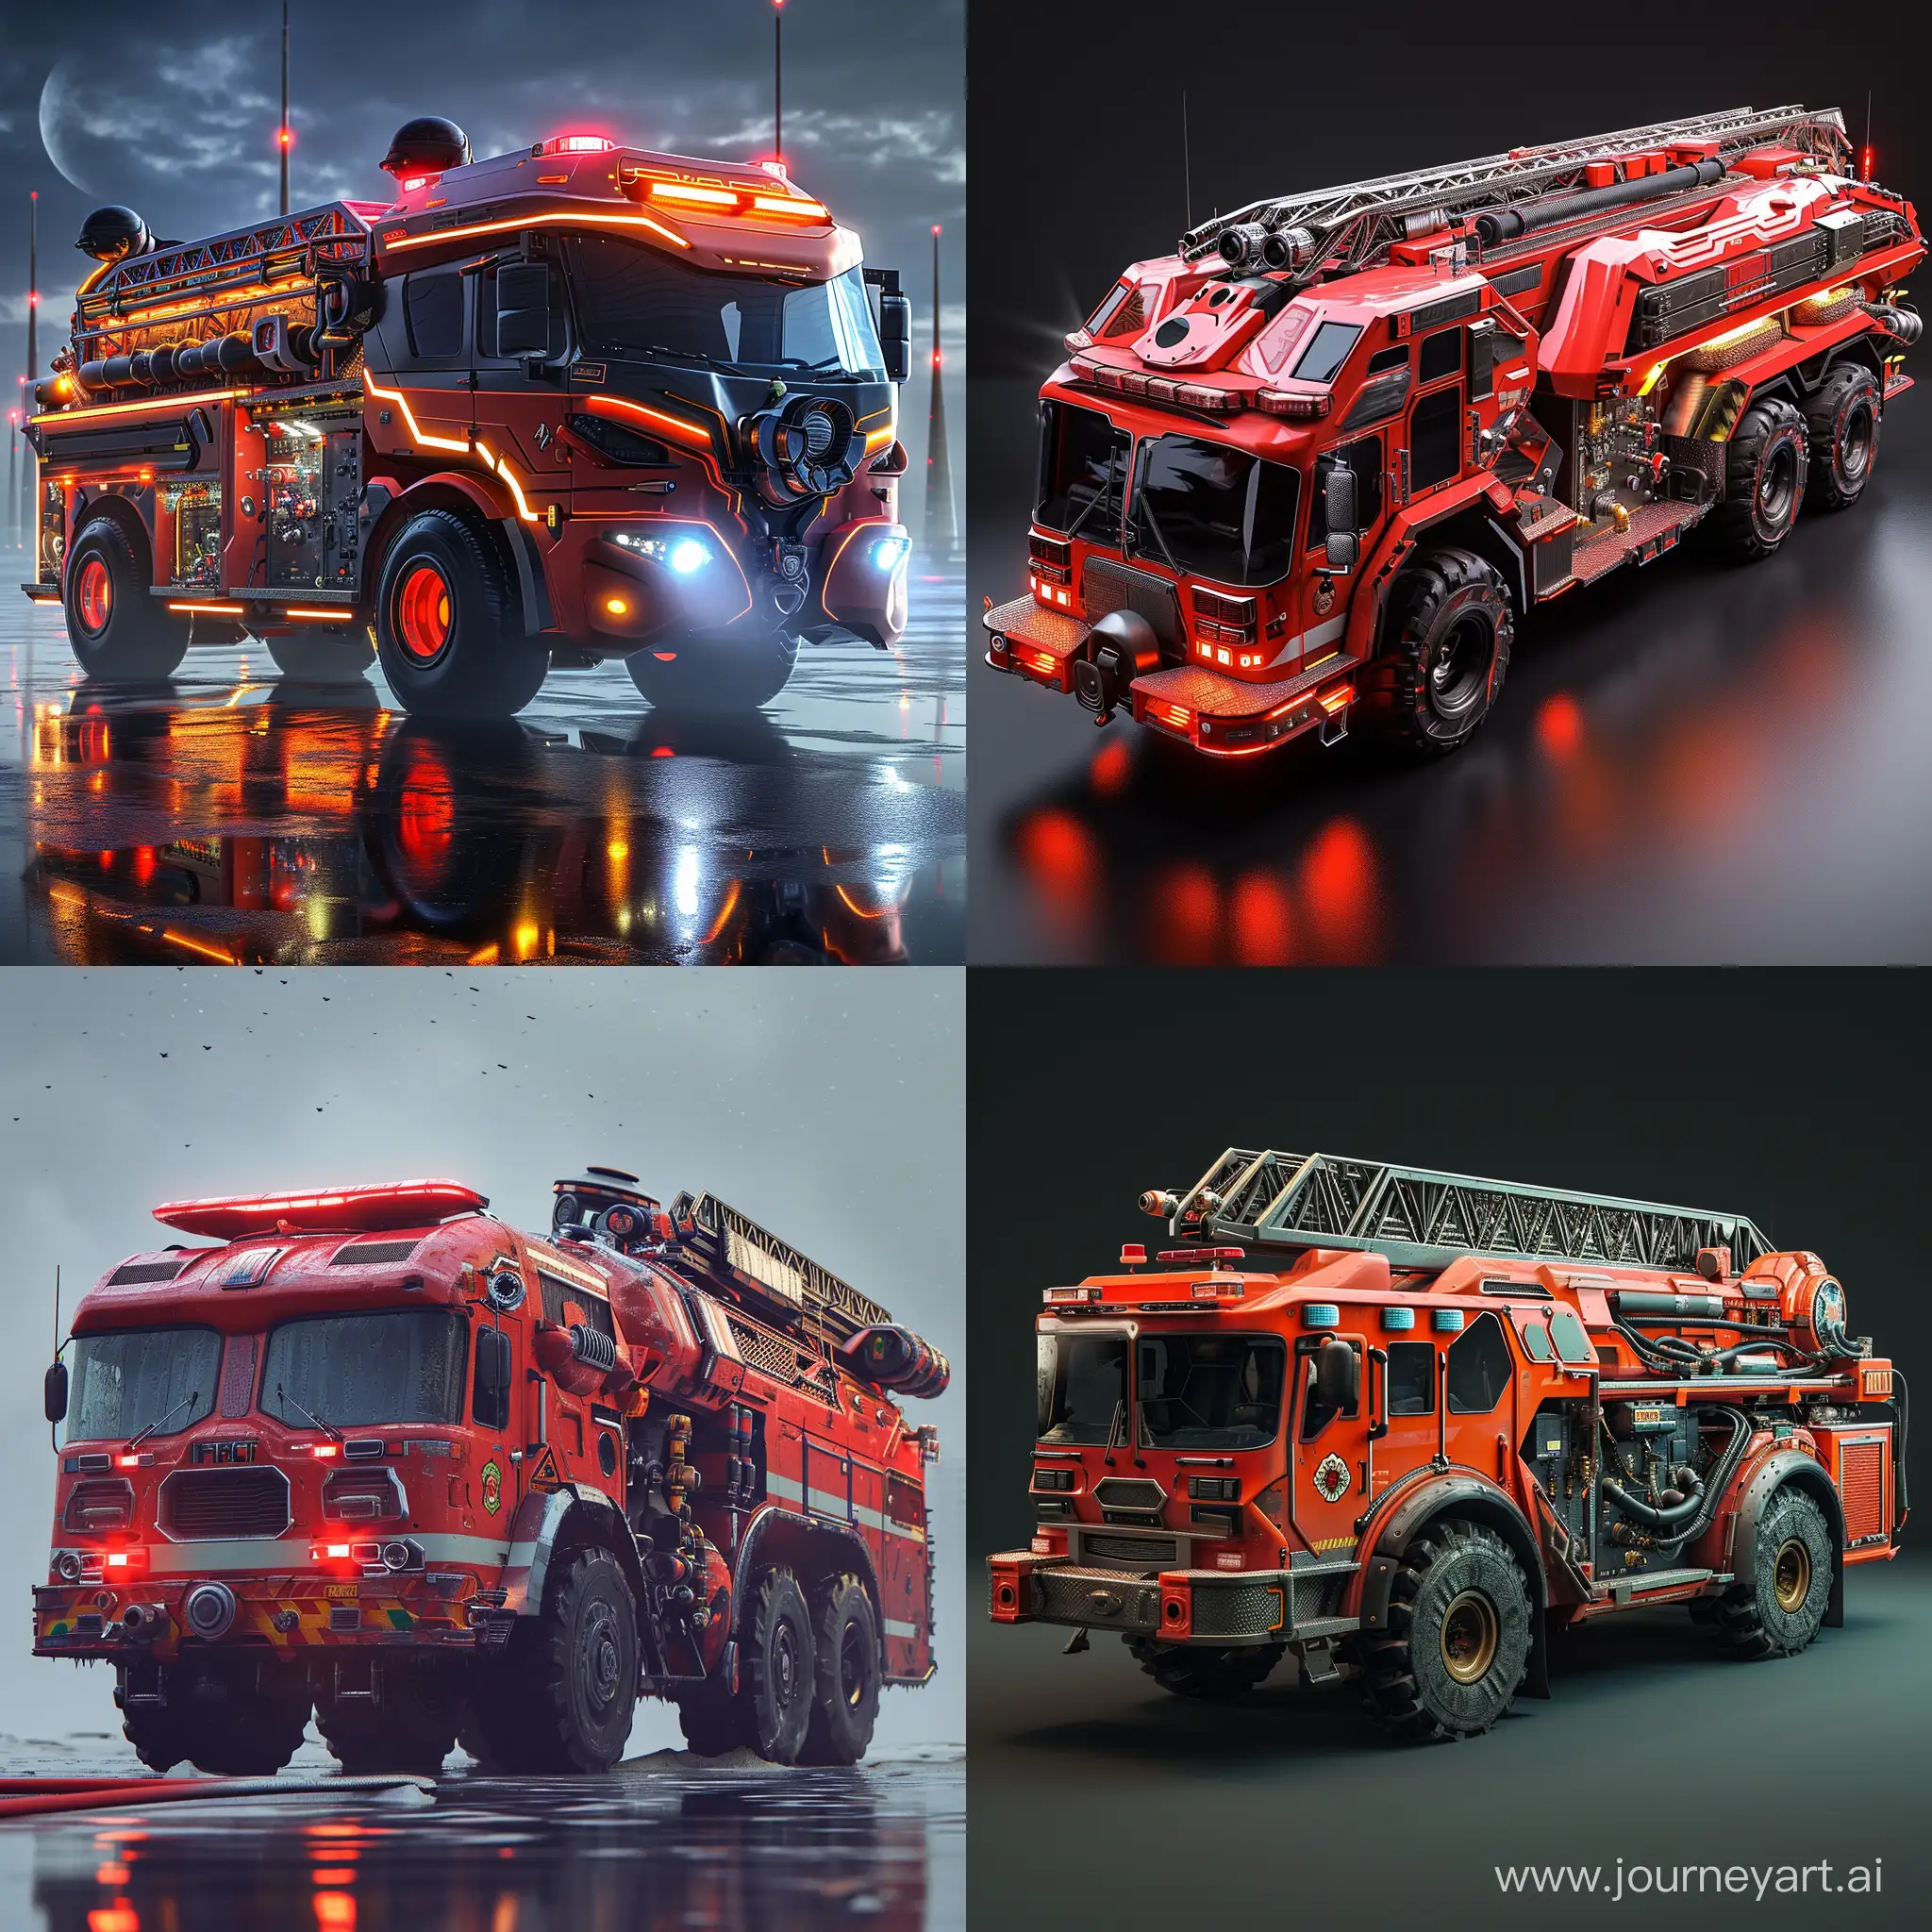 NeoFuturistic-Fire-Truck-in-Perfect-Angle-SciFi-Art-for-ArtStation-and-DeviantArt